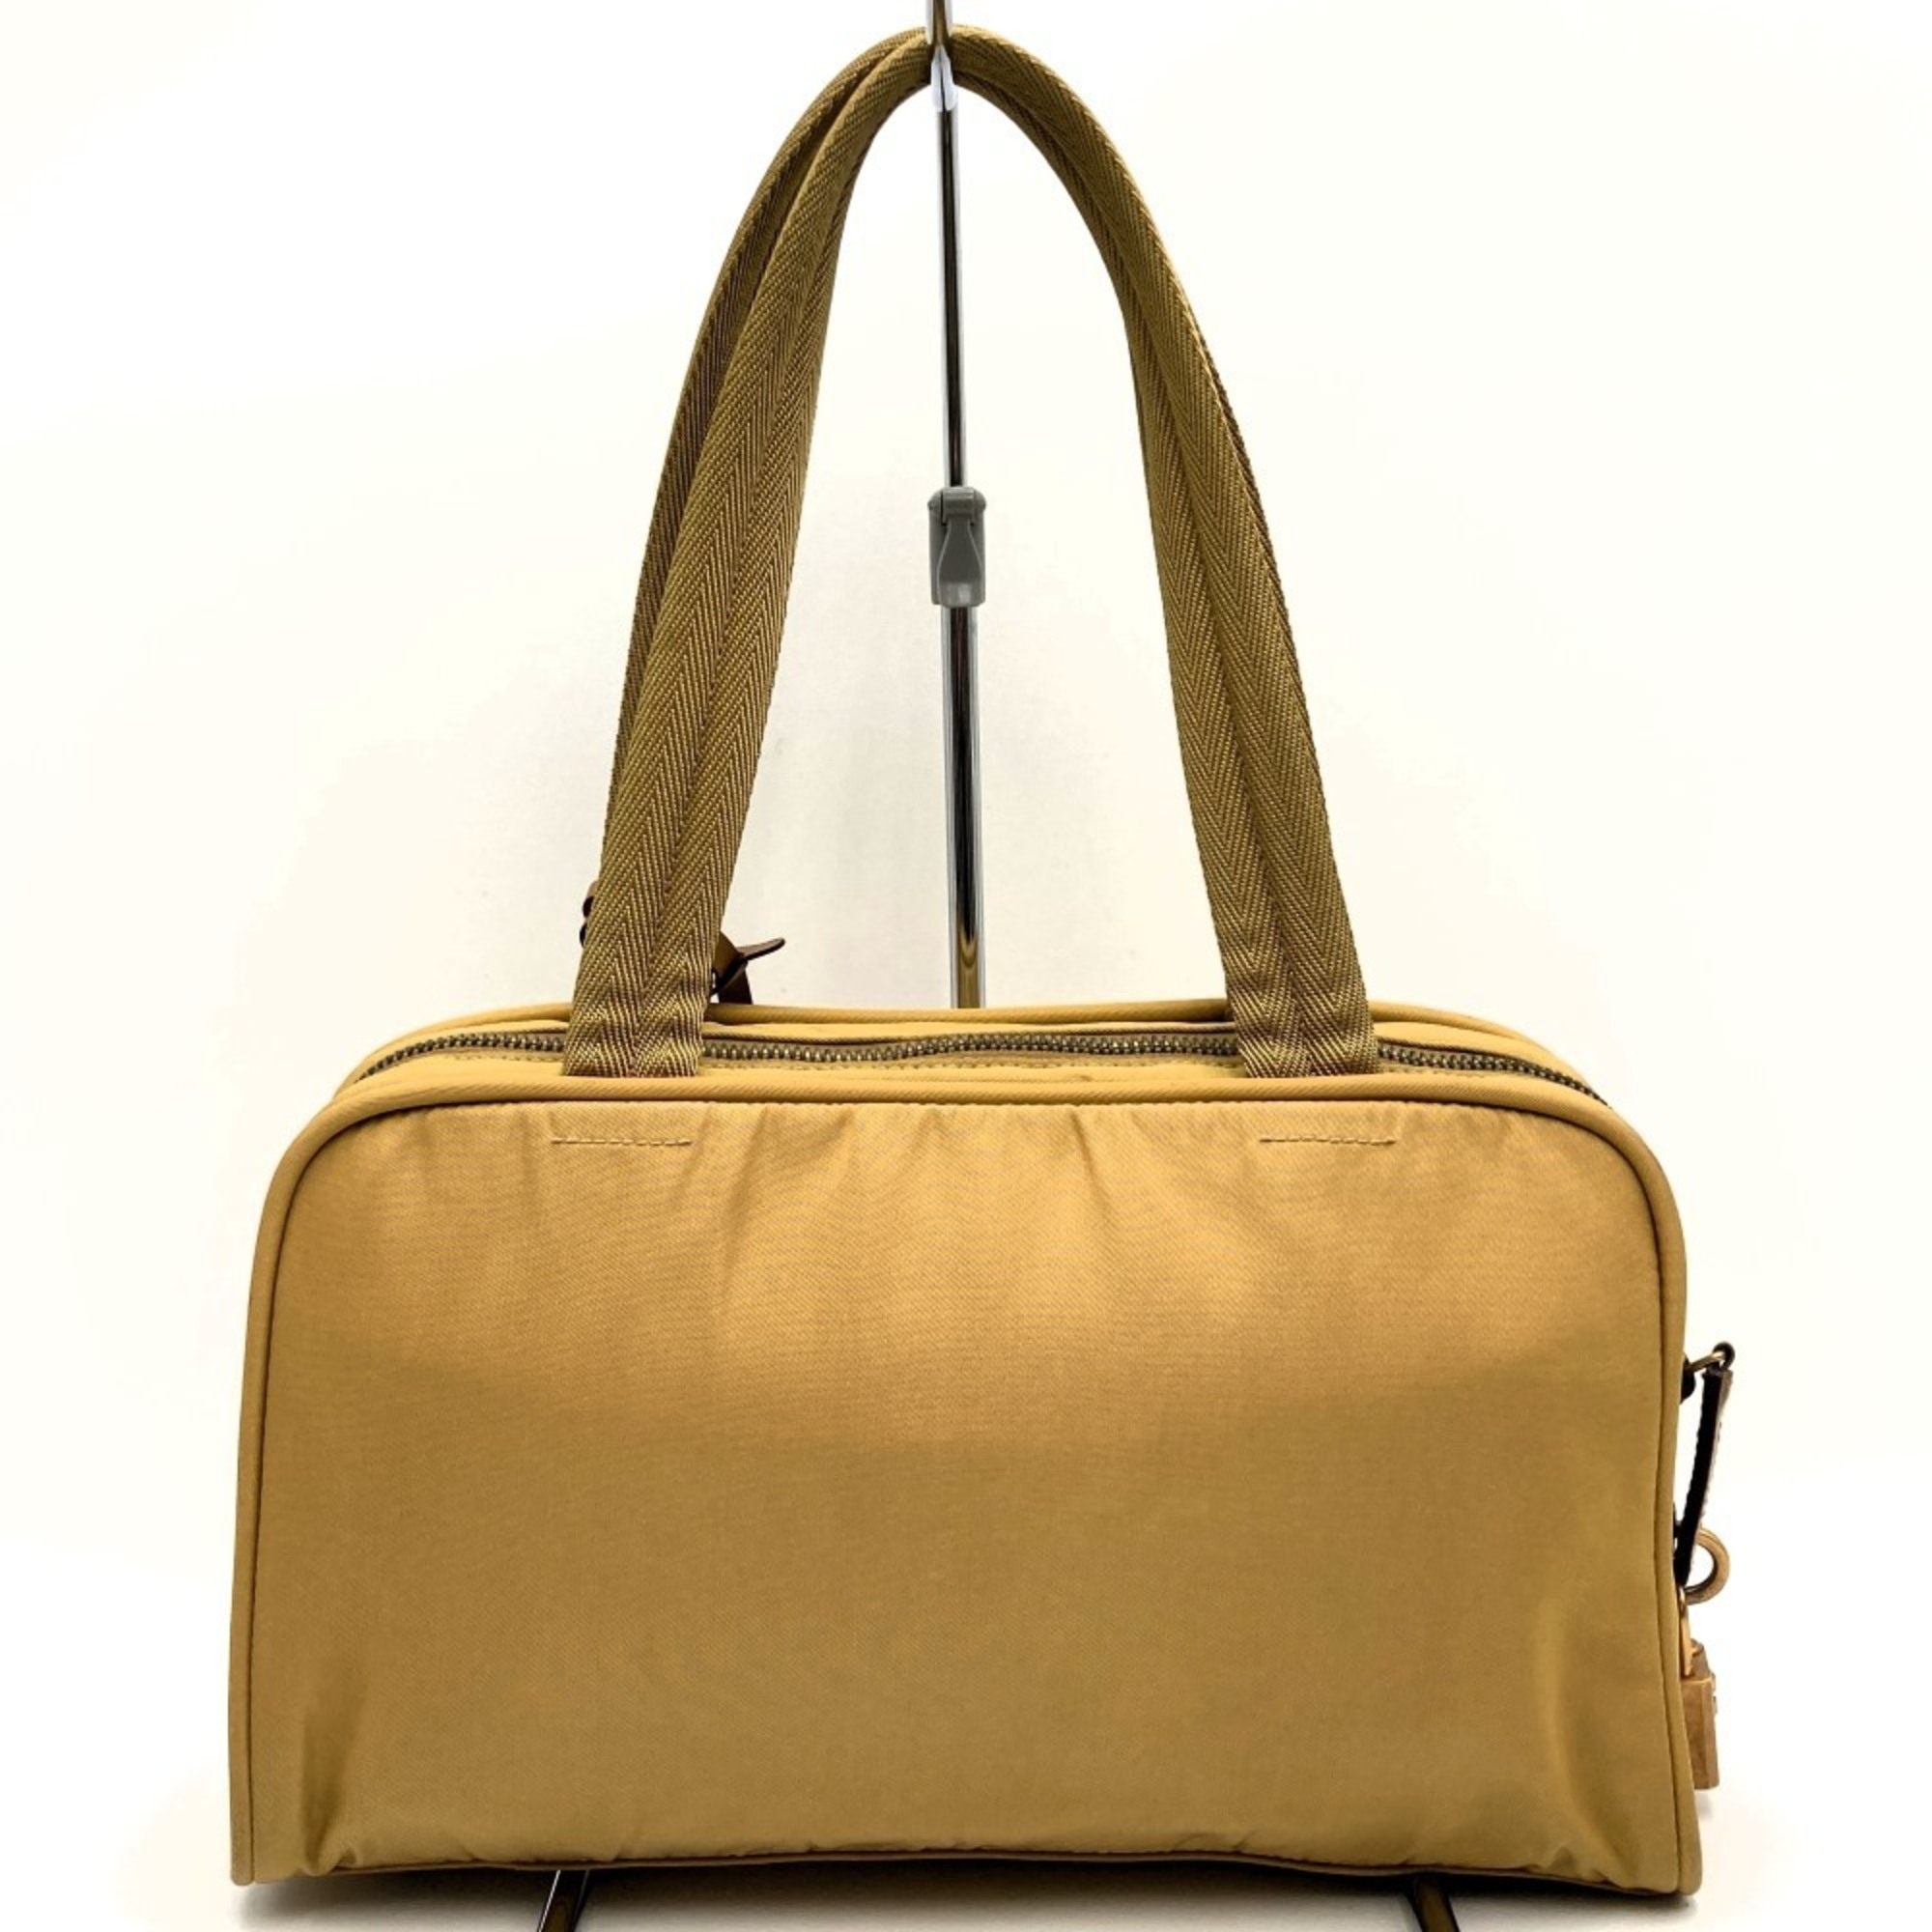 Prada handbag, crochet, yellow nylon, triangle, for women, PRADA